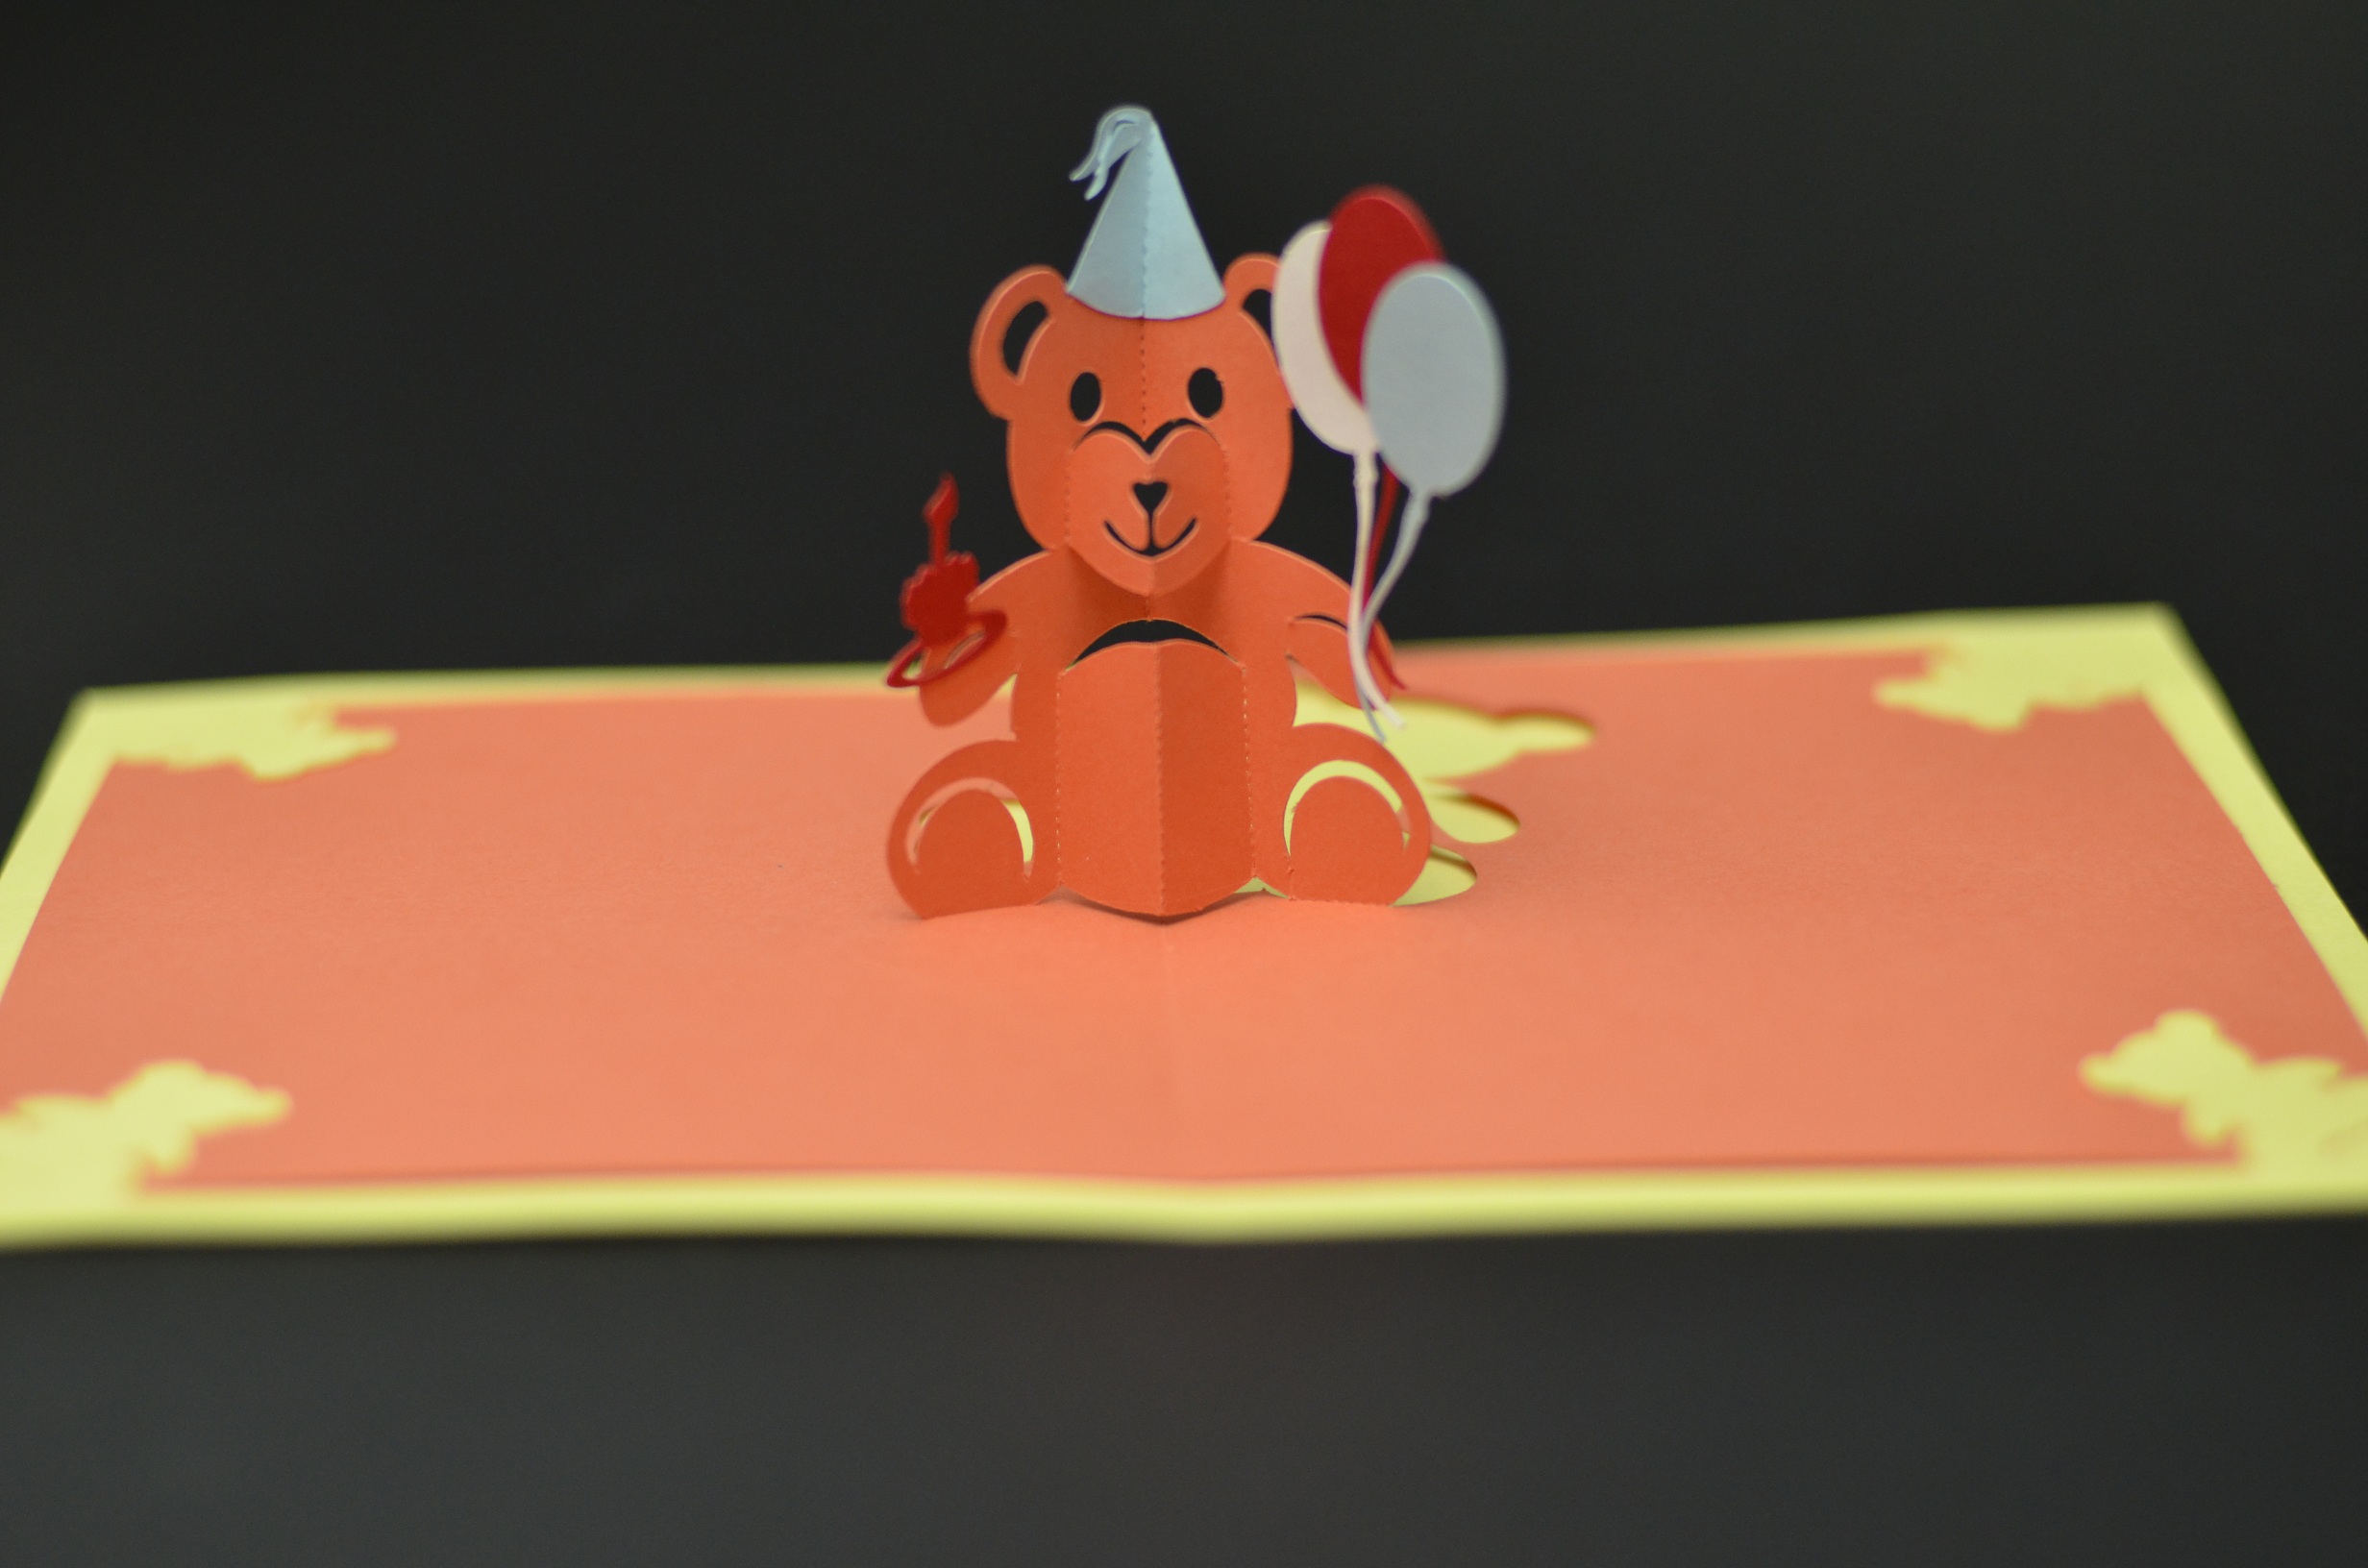 chocoviolet: how to make teddy bear pop up card Intended For Teddy Bear Pop Up Card Template Free